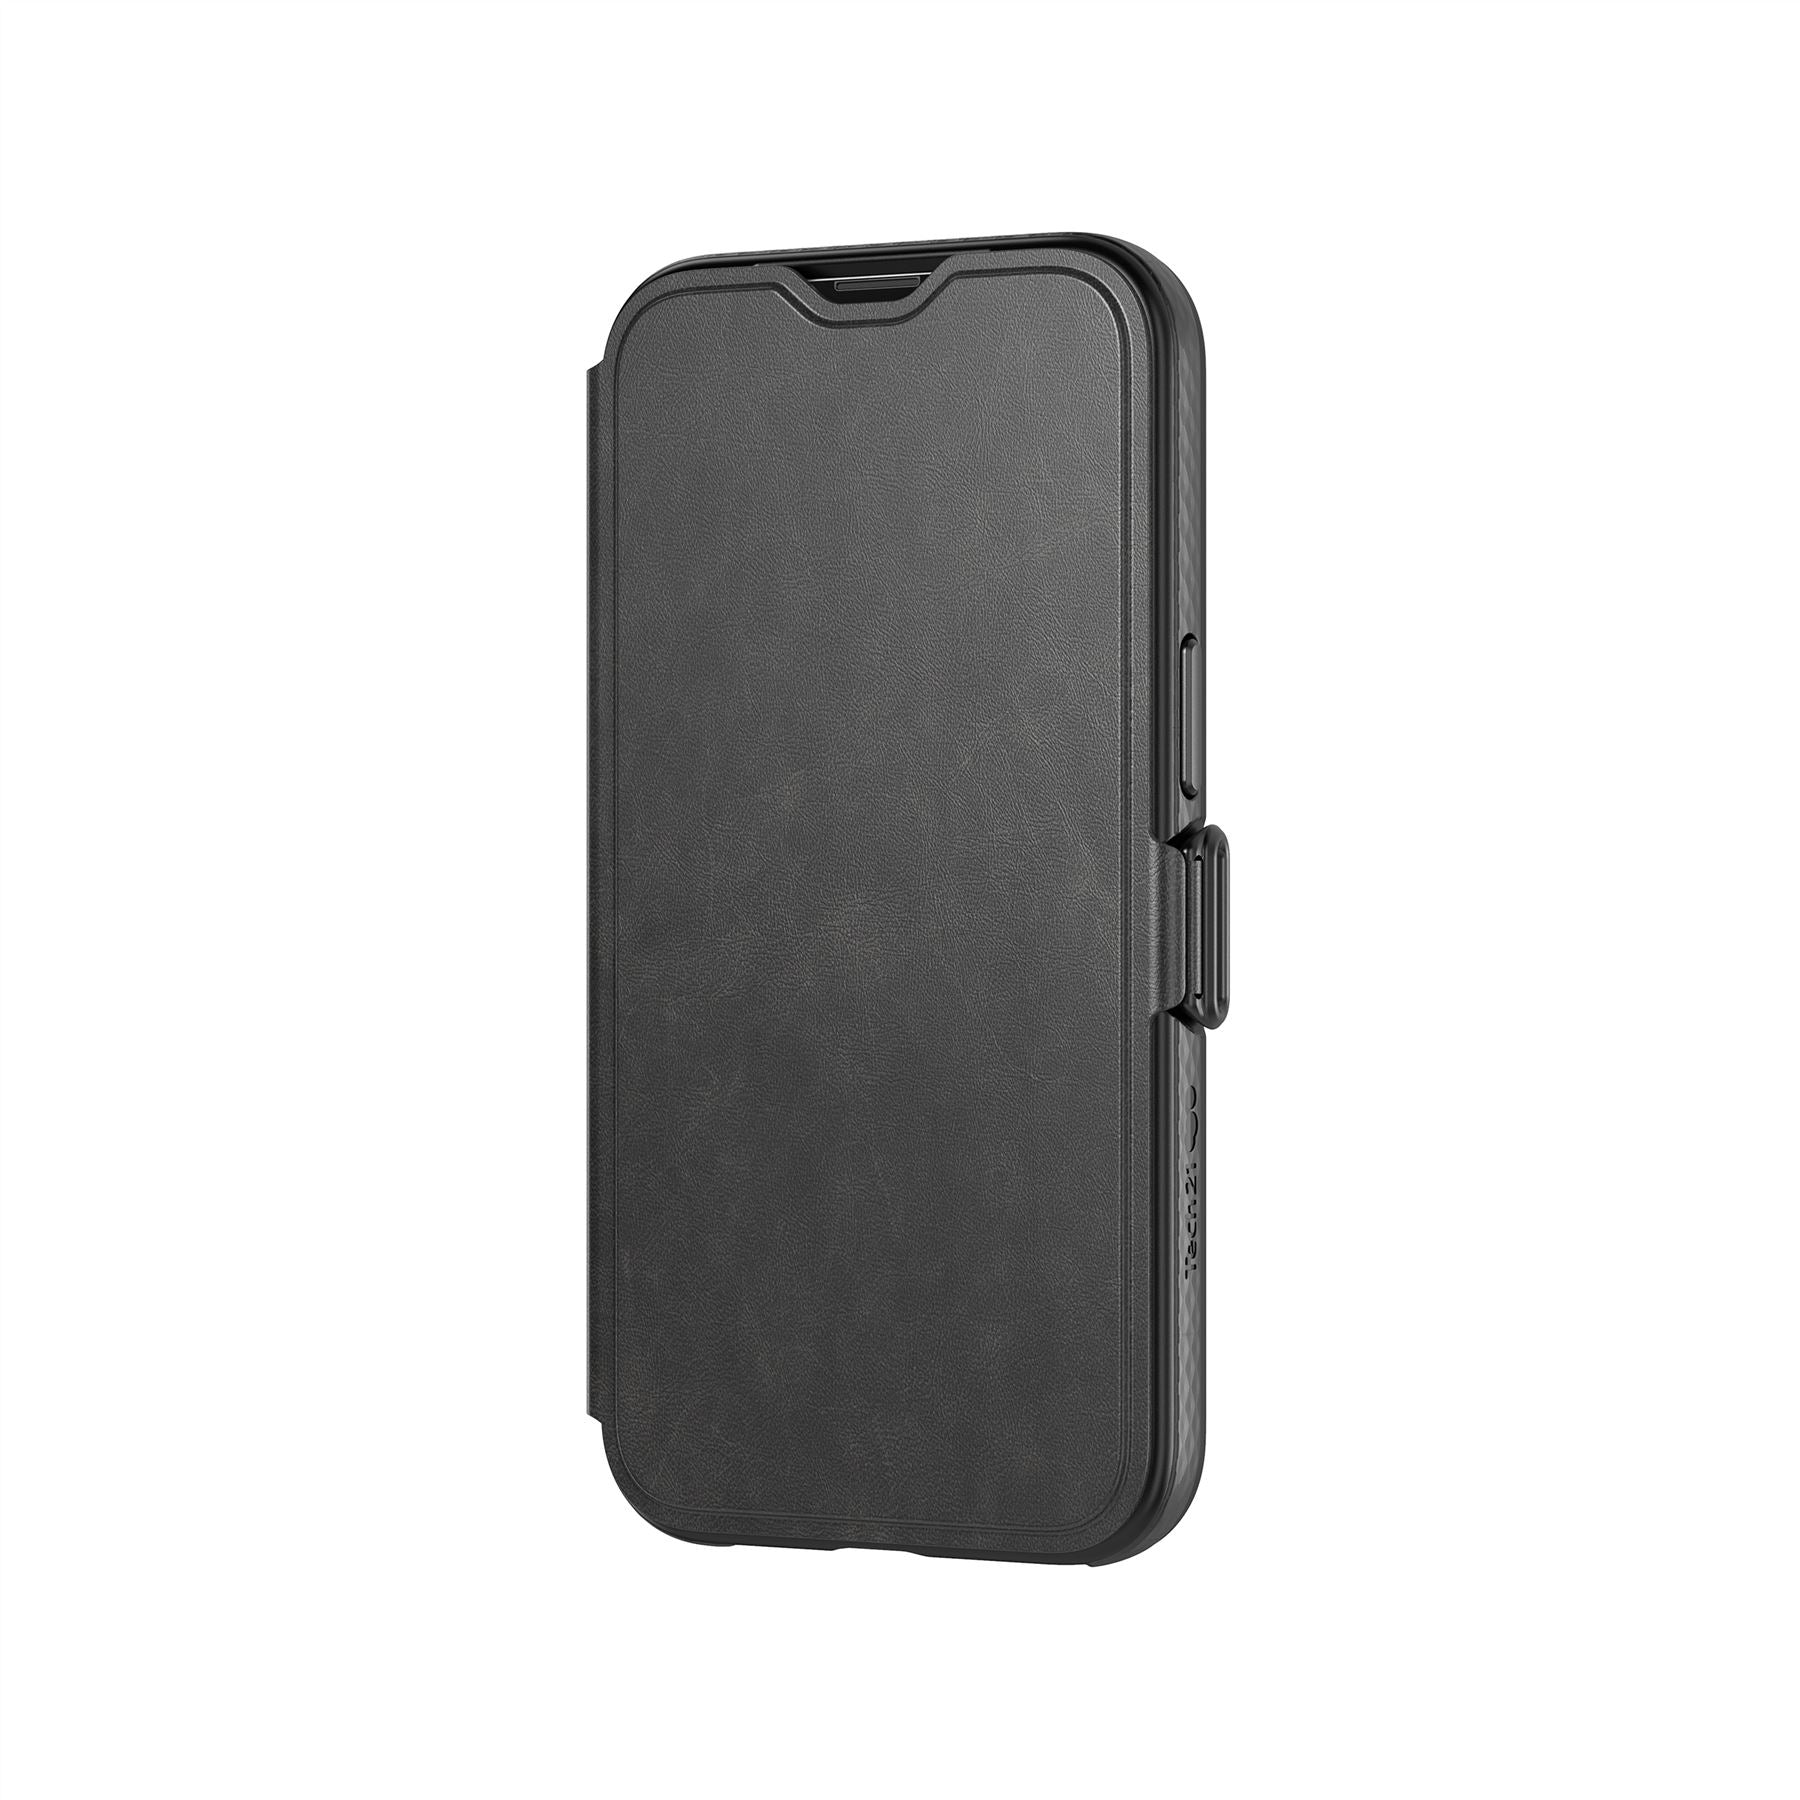 Apple iPhone 13 Case - Evo Wallet - Black